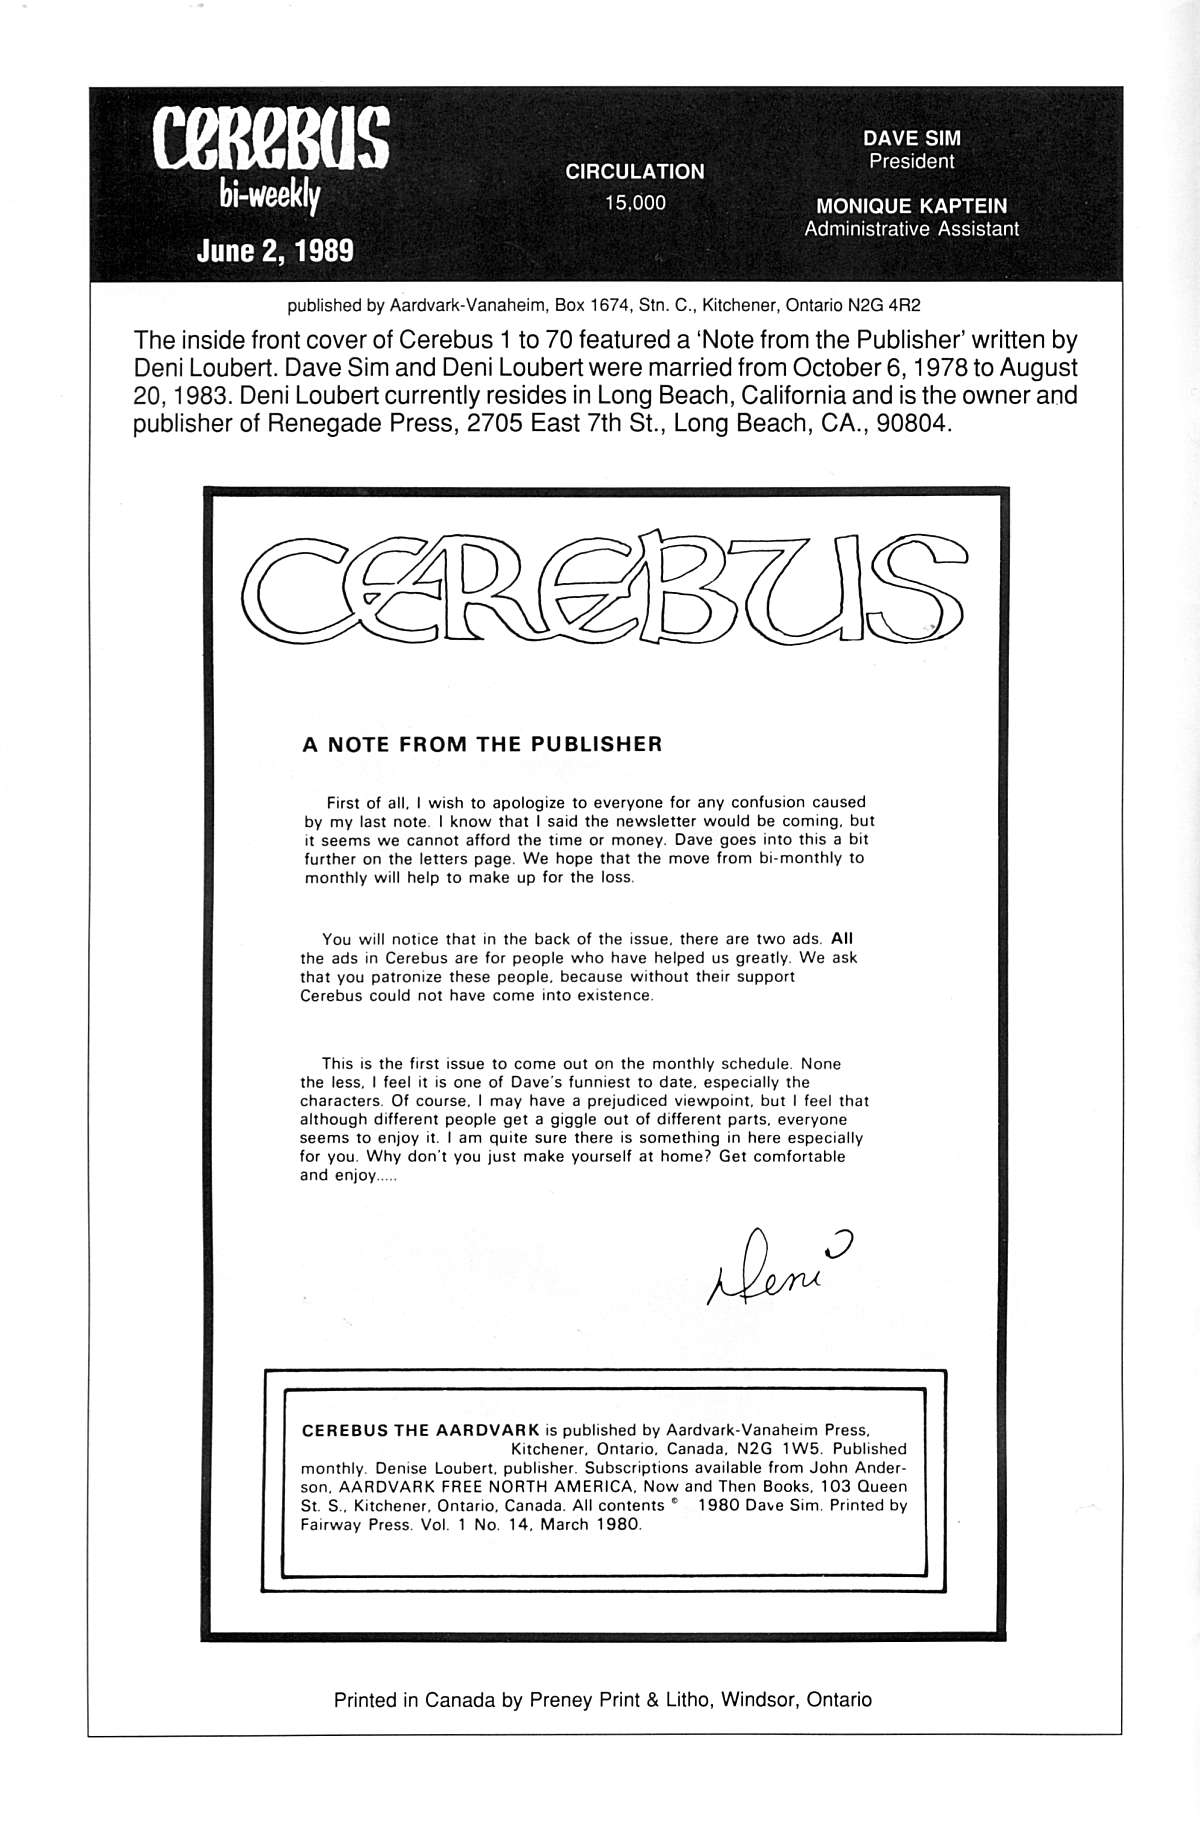 Read online Cerebus comic -  Issue #14 - 2